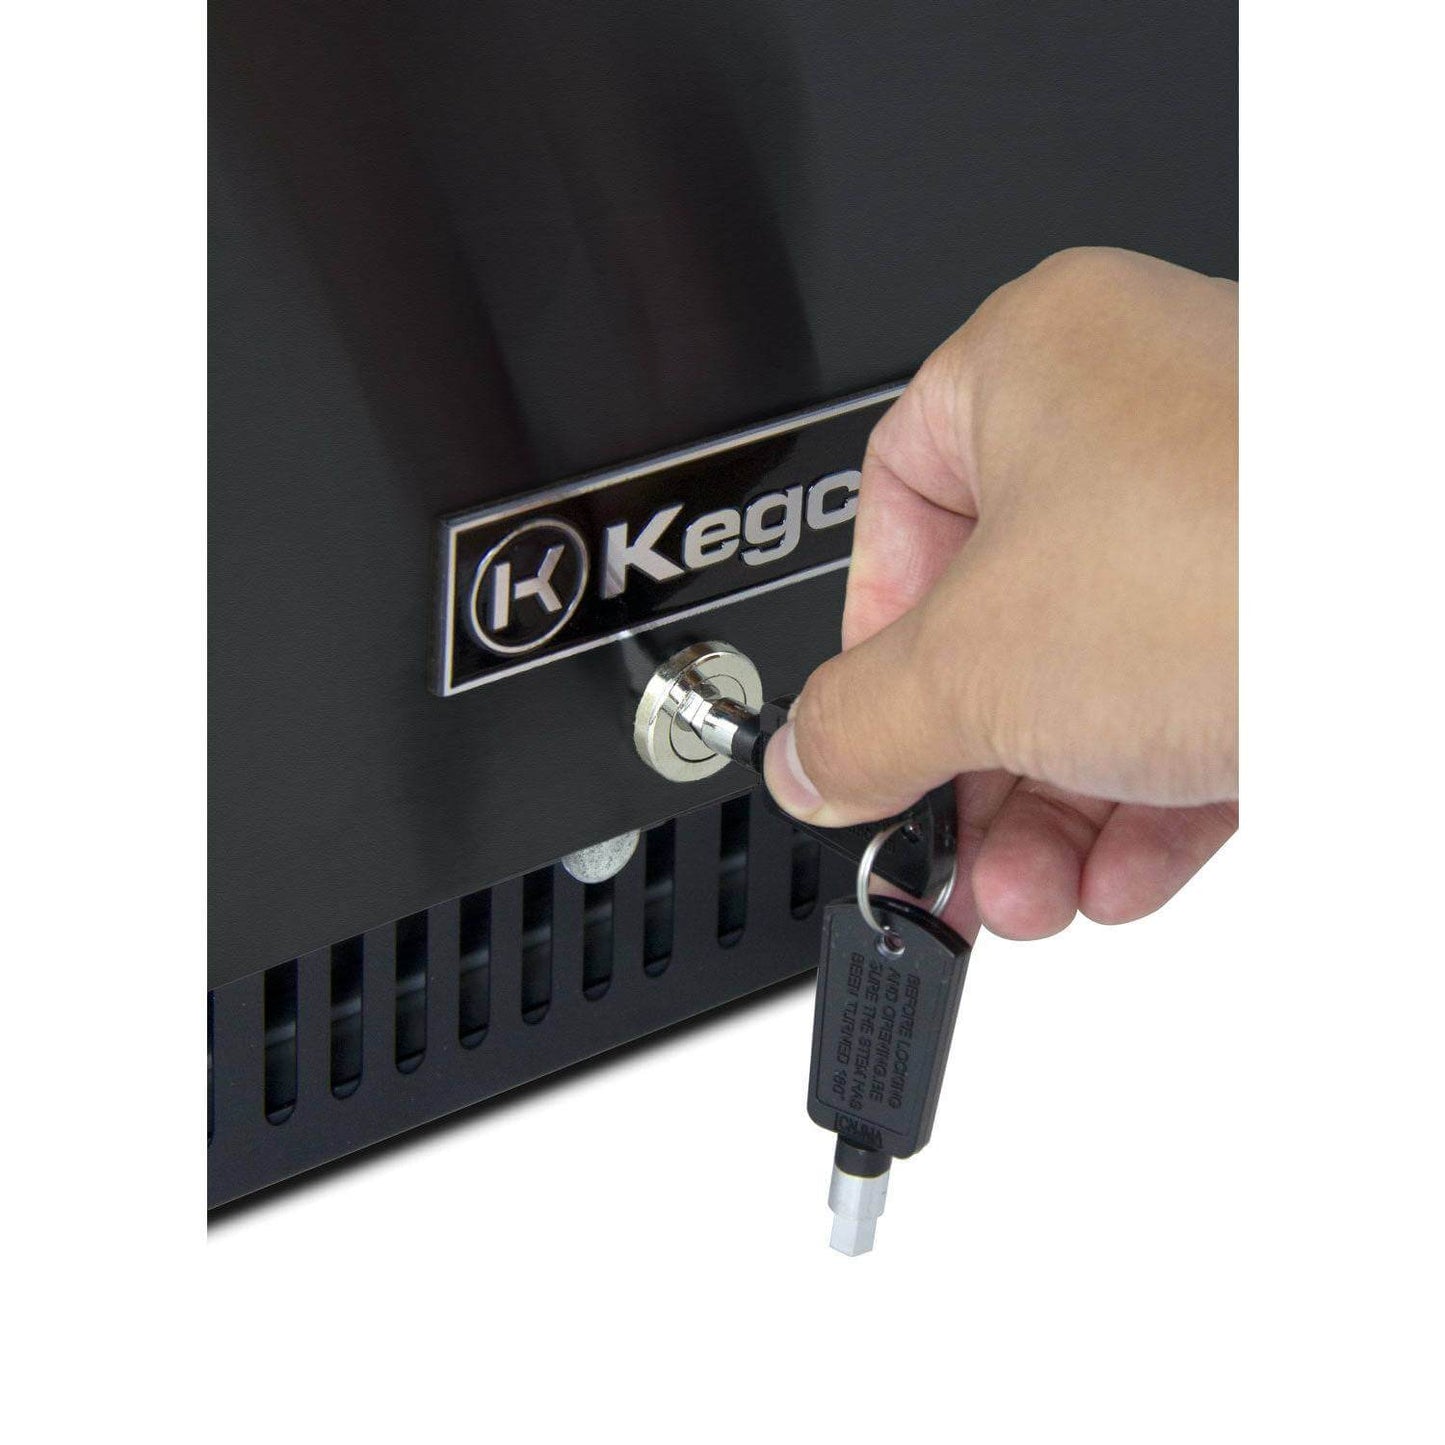 Kegco 15" Wide Single Tap Black Commercial Kegerator